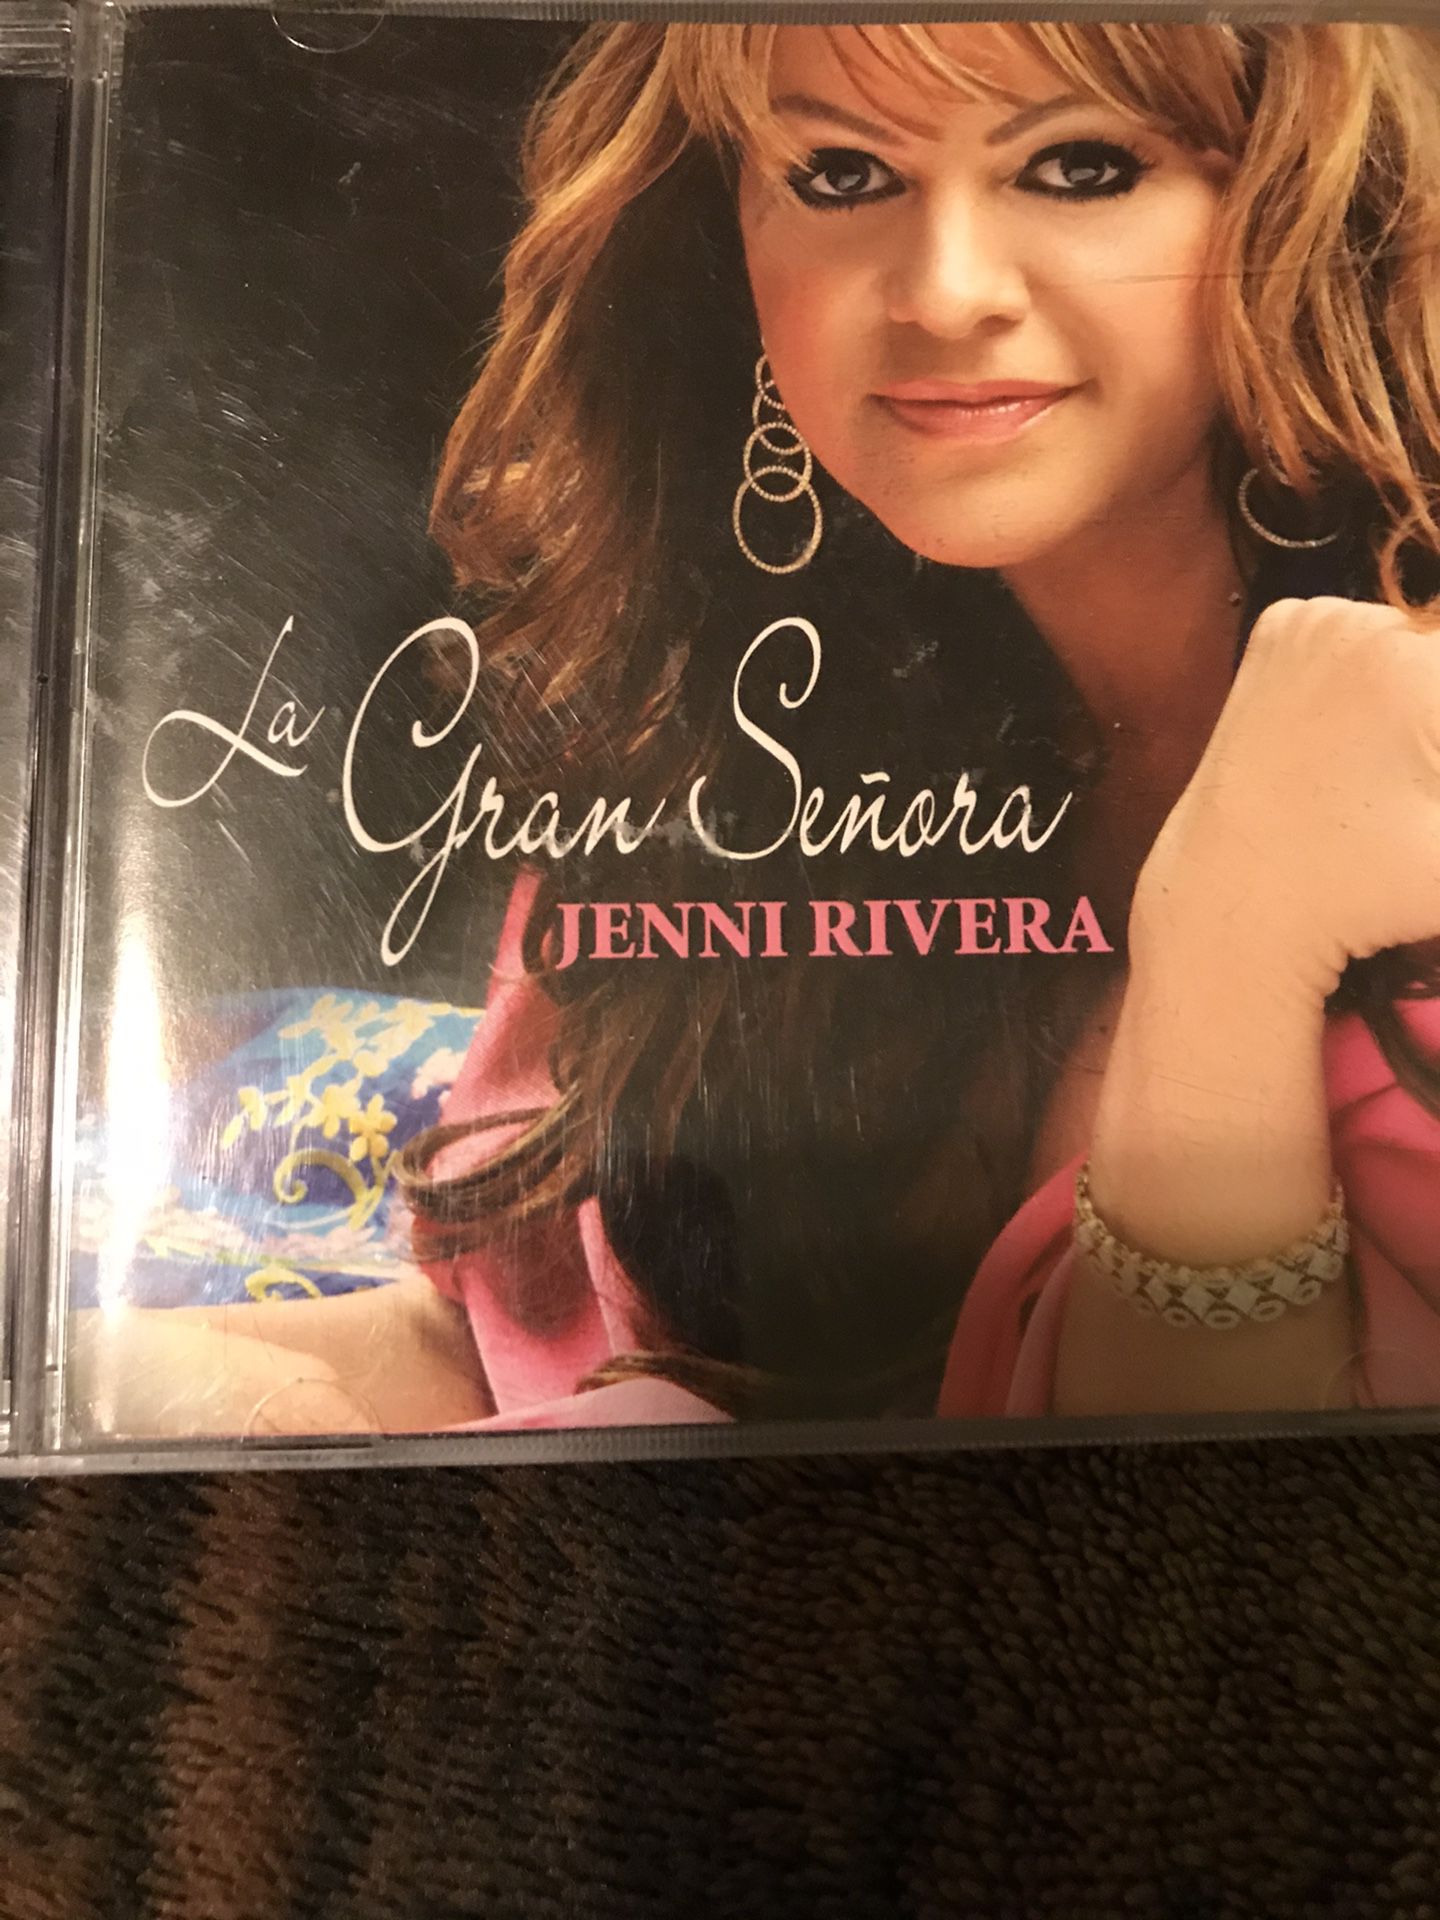 !! Jenni Rivera Spanish CD "Le Gran Señora"